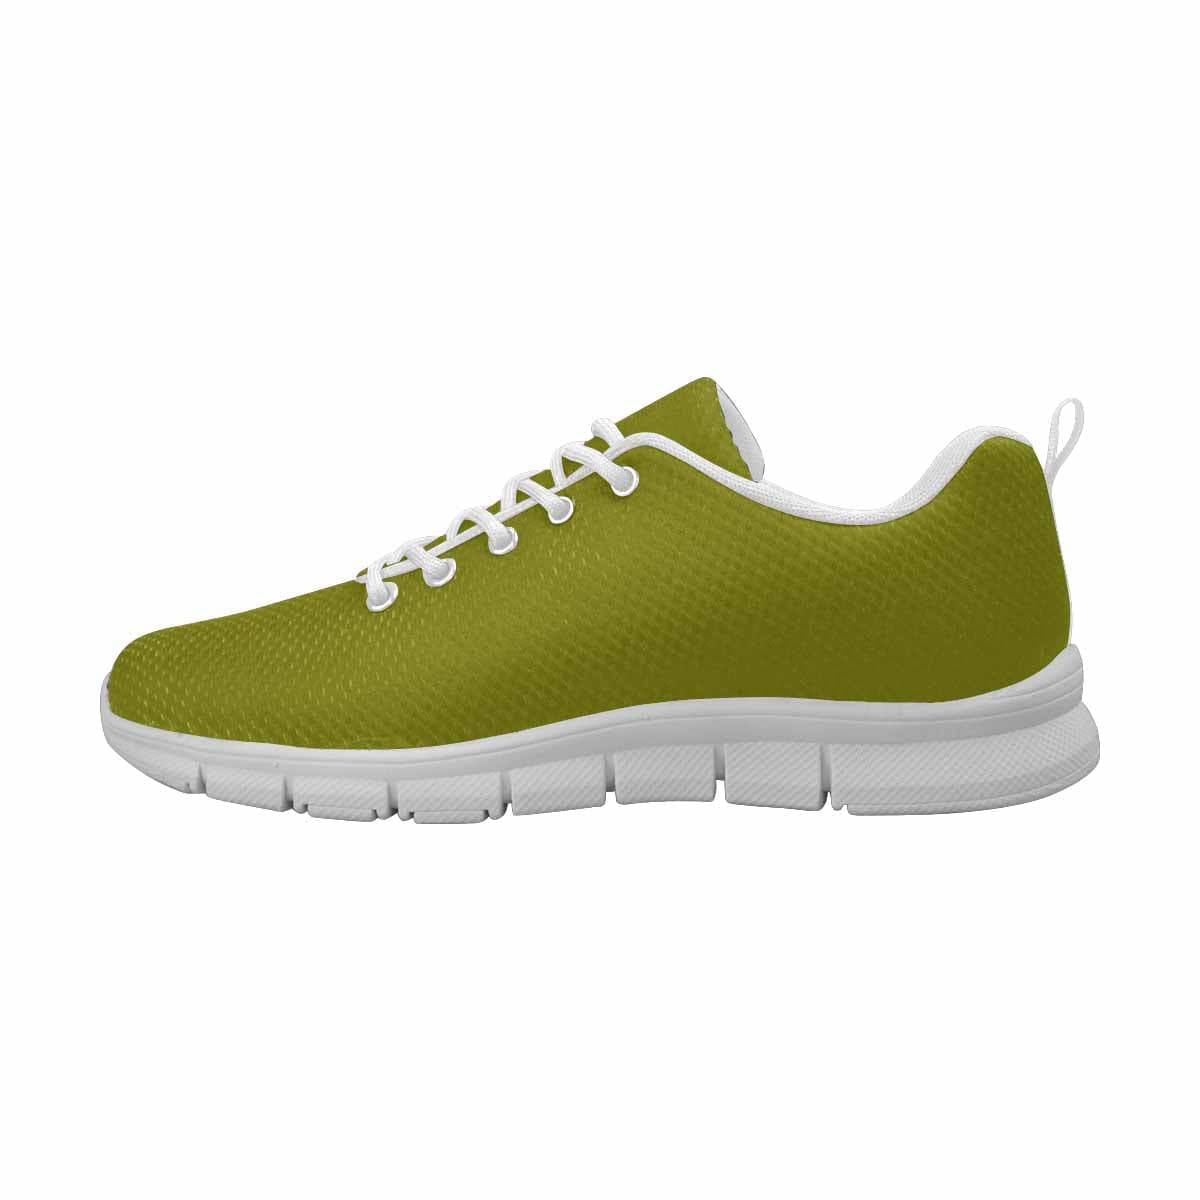 Sneakers For Men Dark Olive Green - Running Shoes - Mens | Sneakers | Running